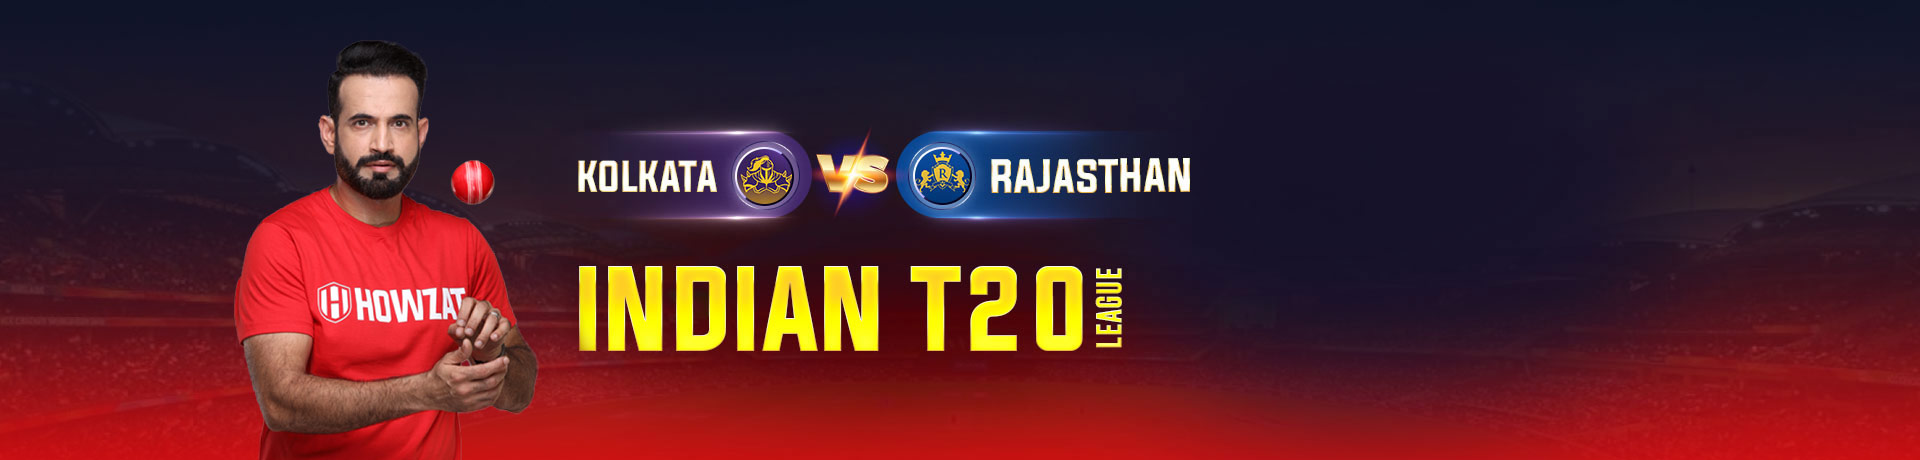 Kolkata vs Rajasthan Indian T20 League